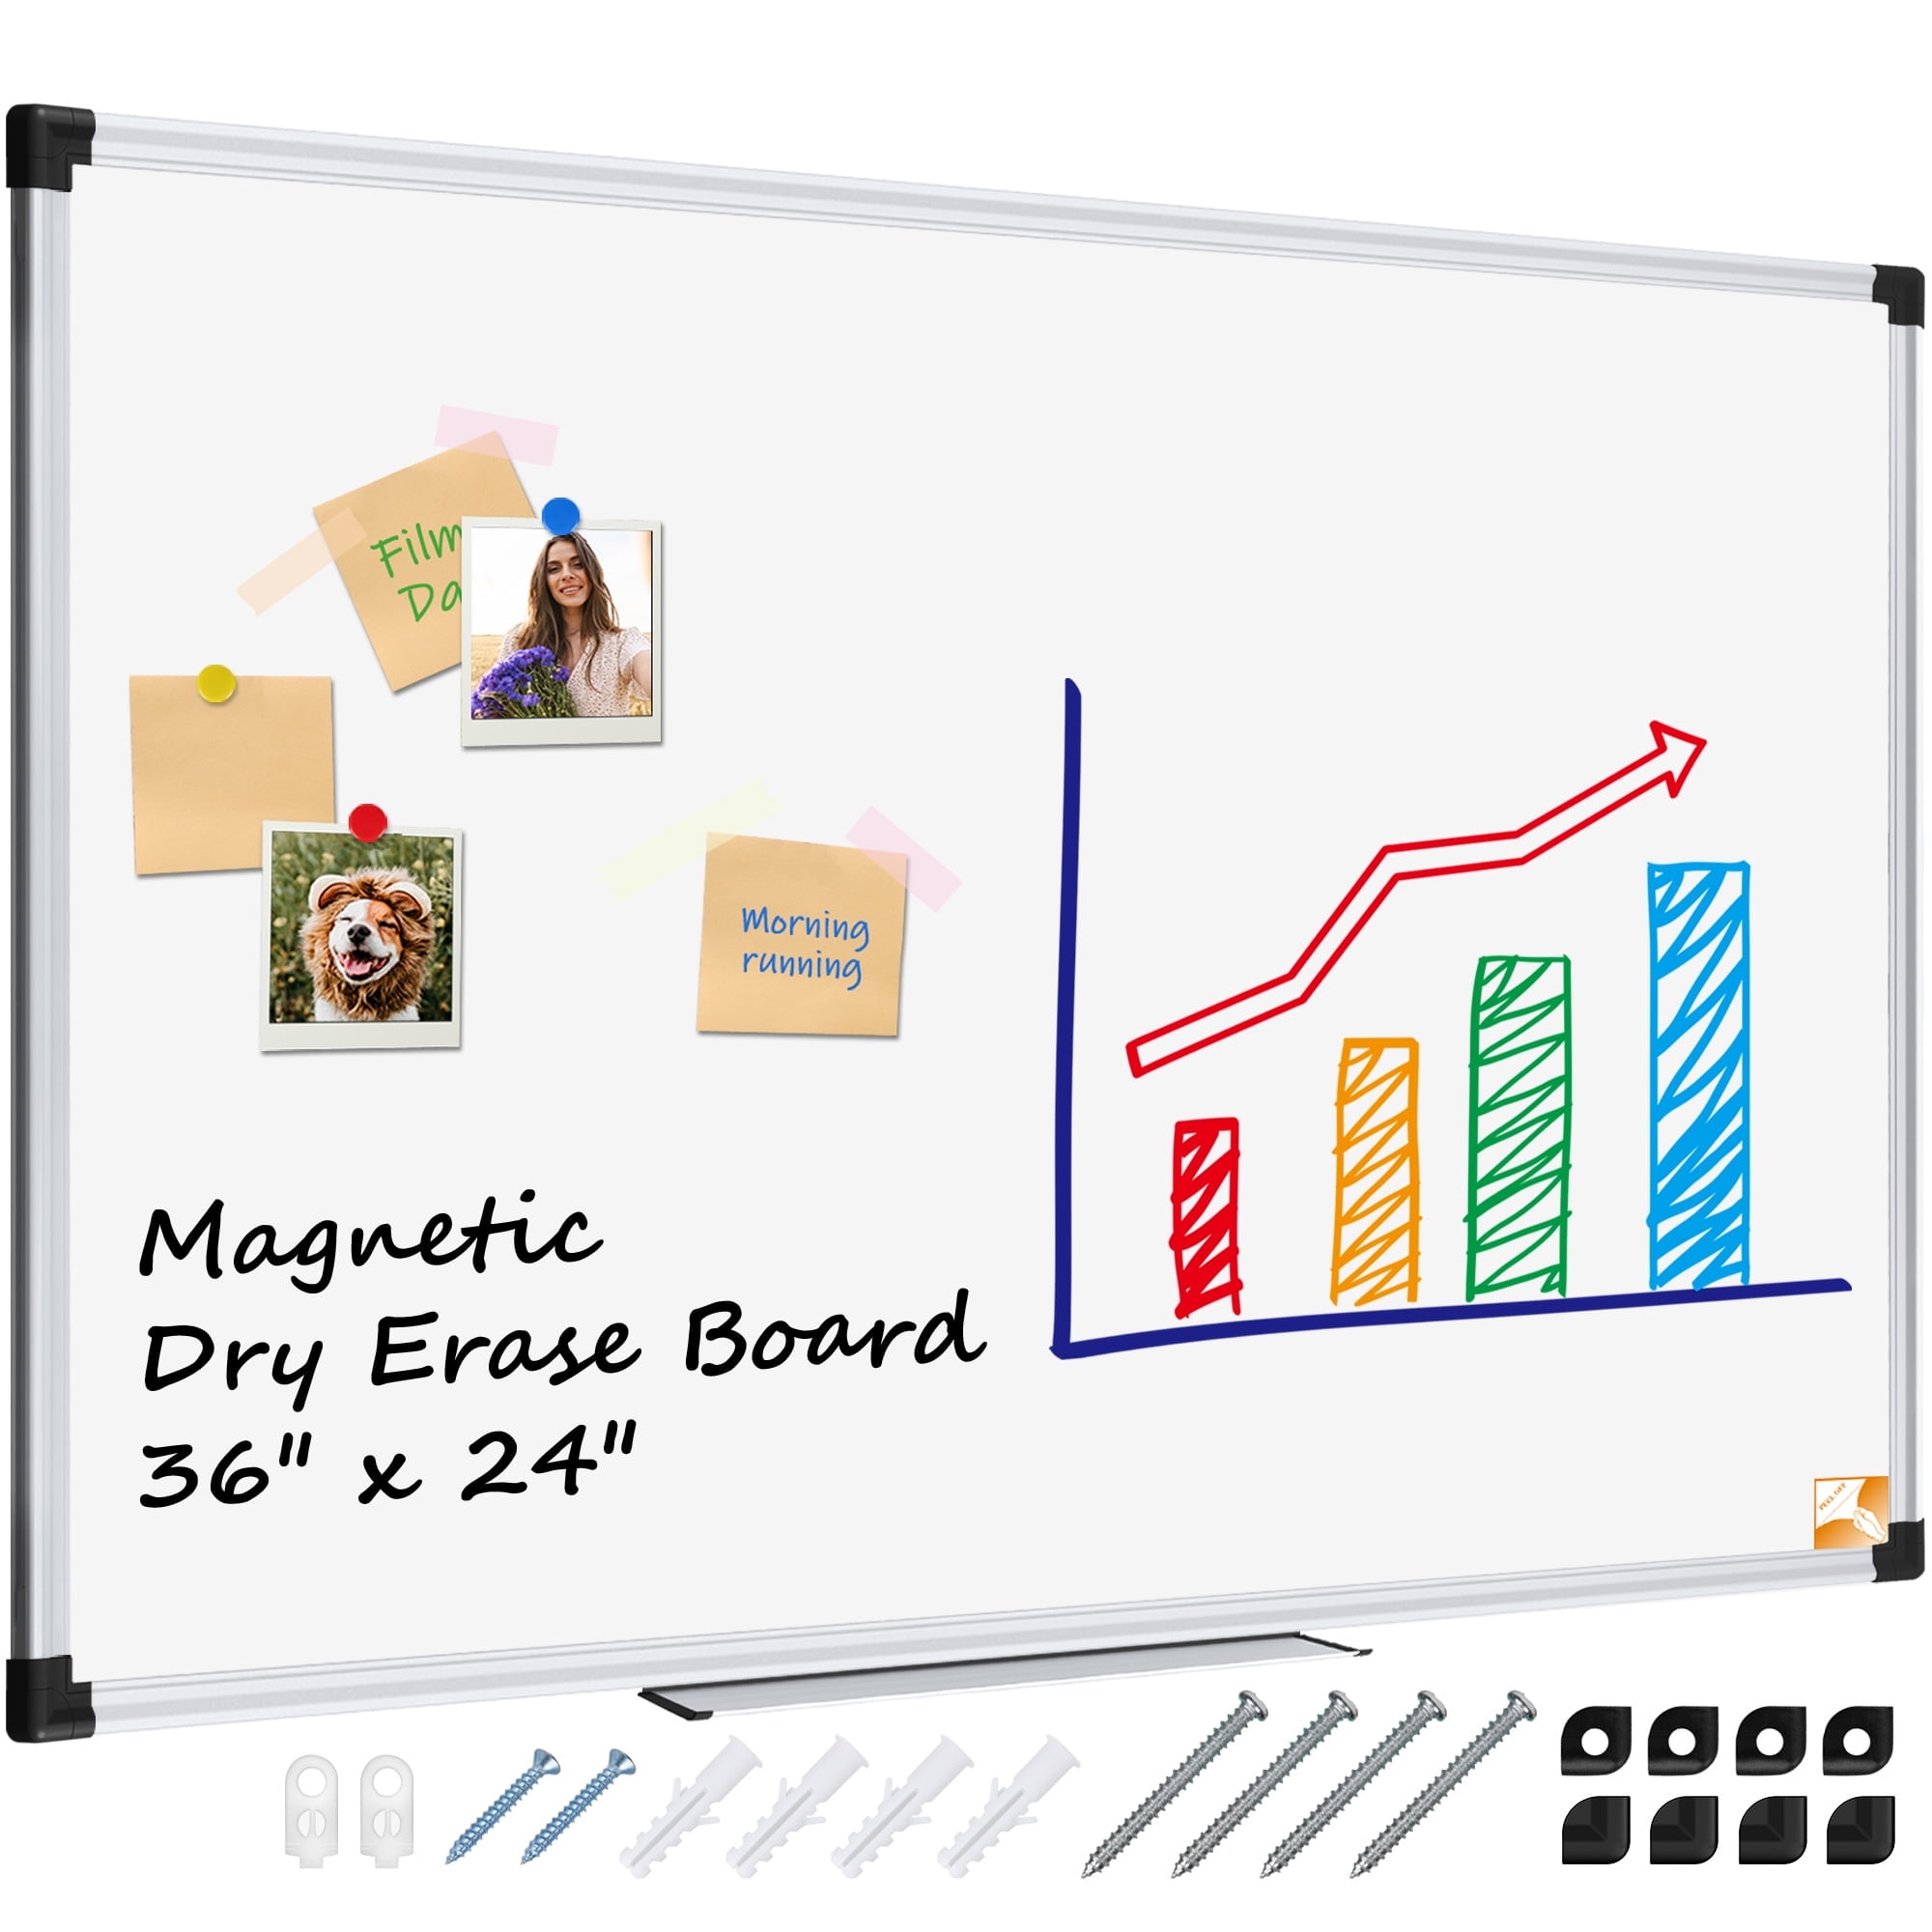 FE053434 - SPACERIGHT Ultramate Magnetic Round Base Flip Chart Easel